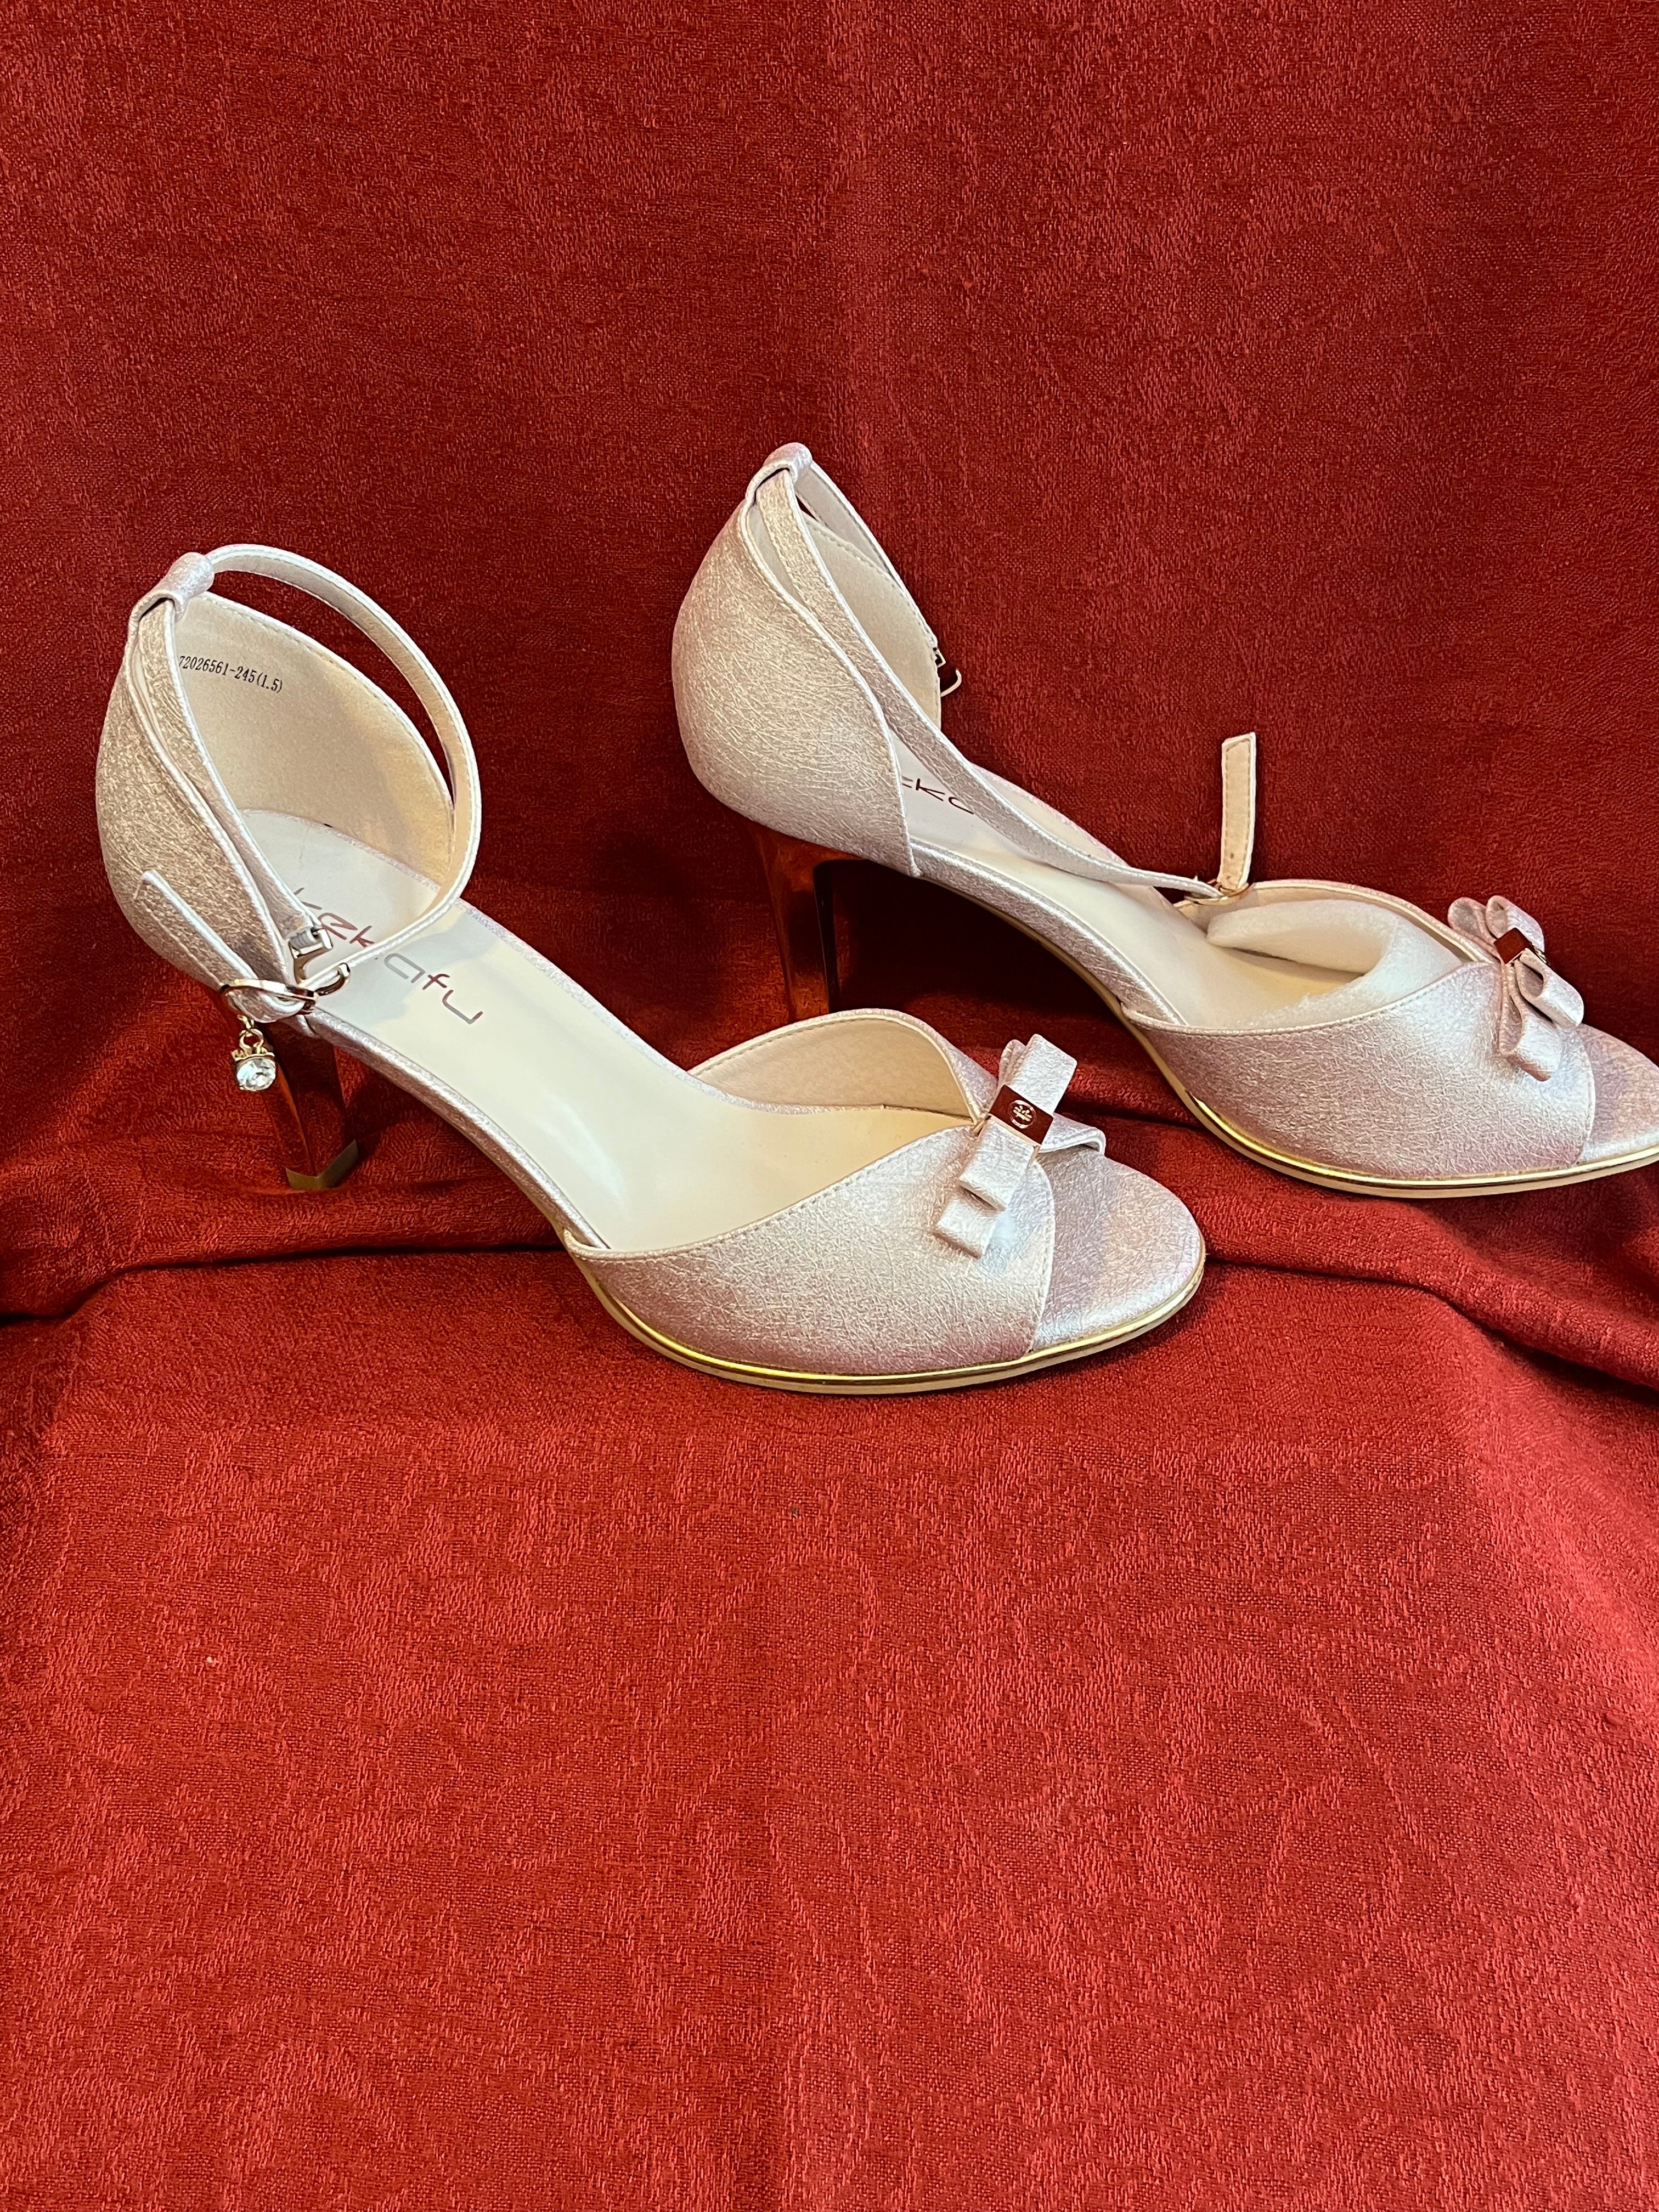 FRANCES GOLD | Gold wedding shoes, Bridal shoes, Wedding shoes low heel